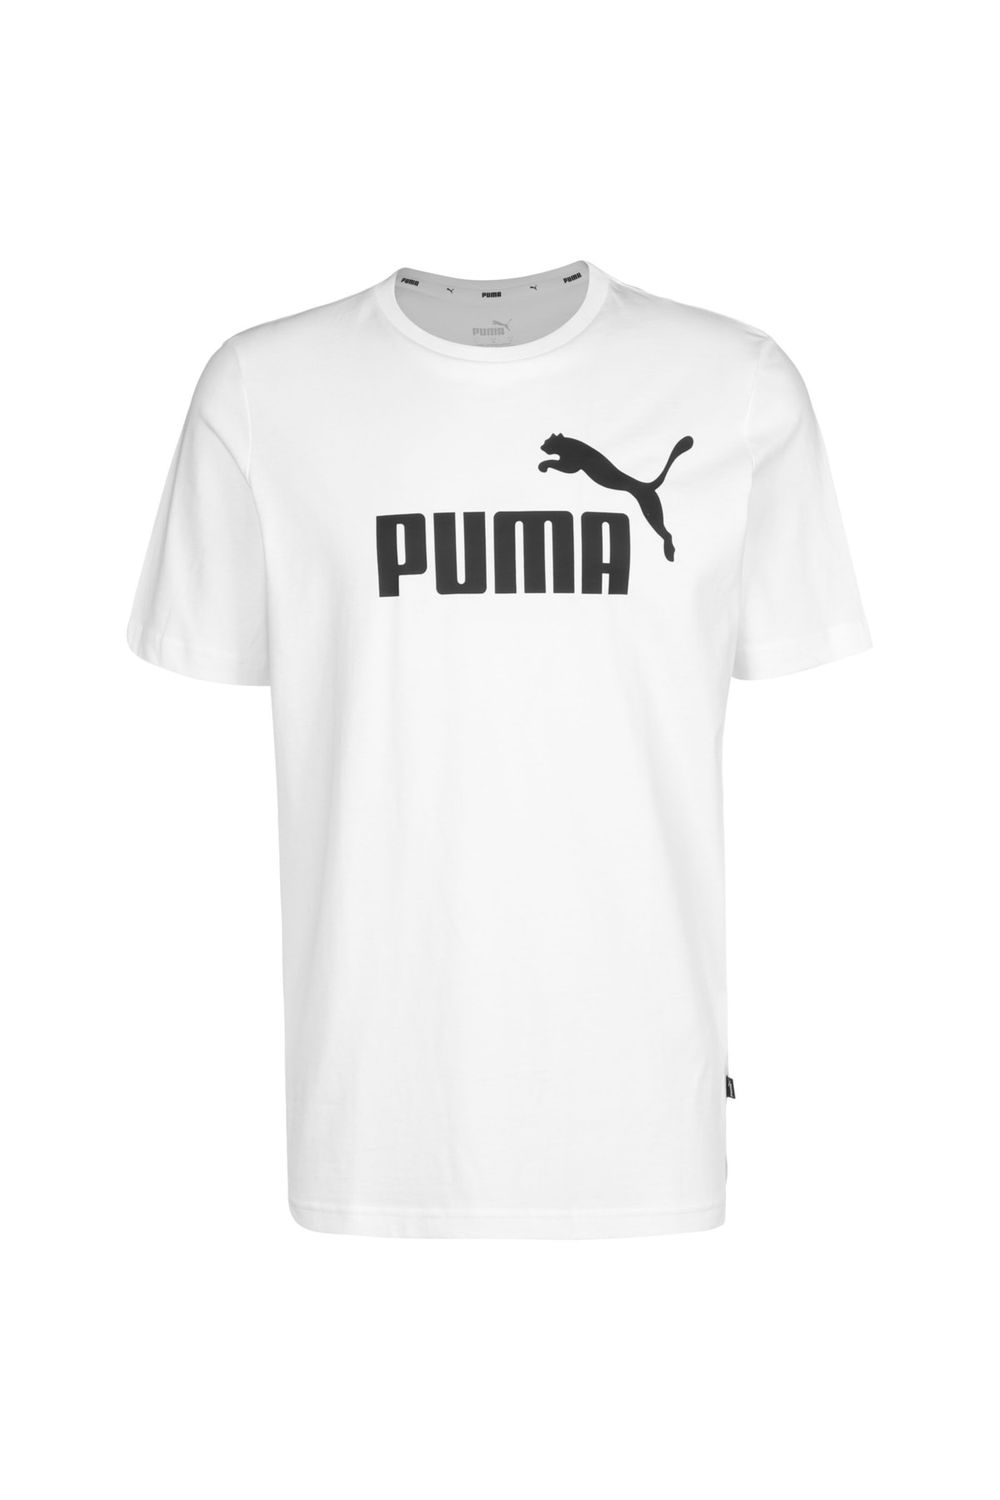 Puma T-Shirt - Trendyol - Schwarz Regular - Fit